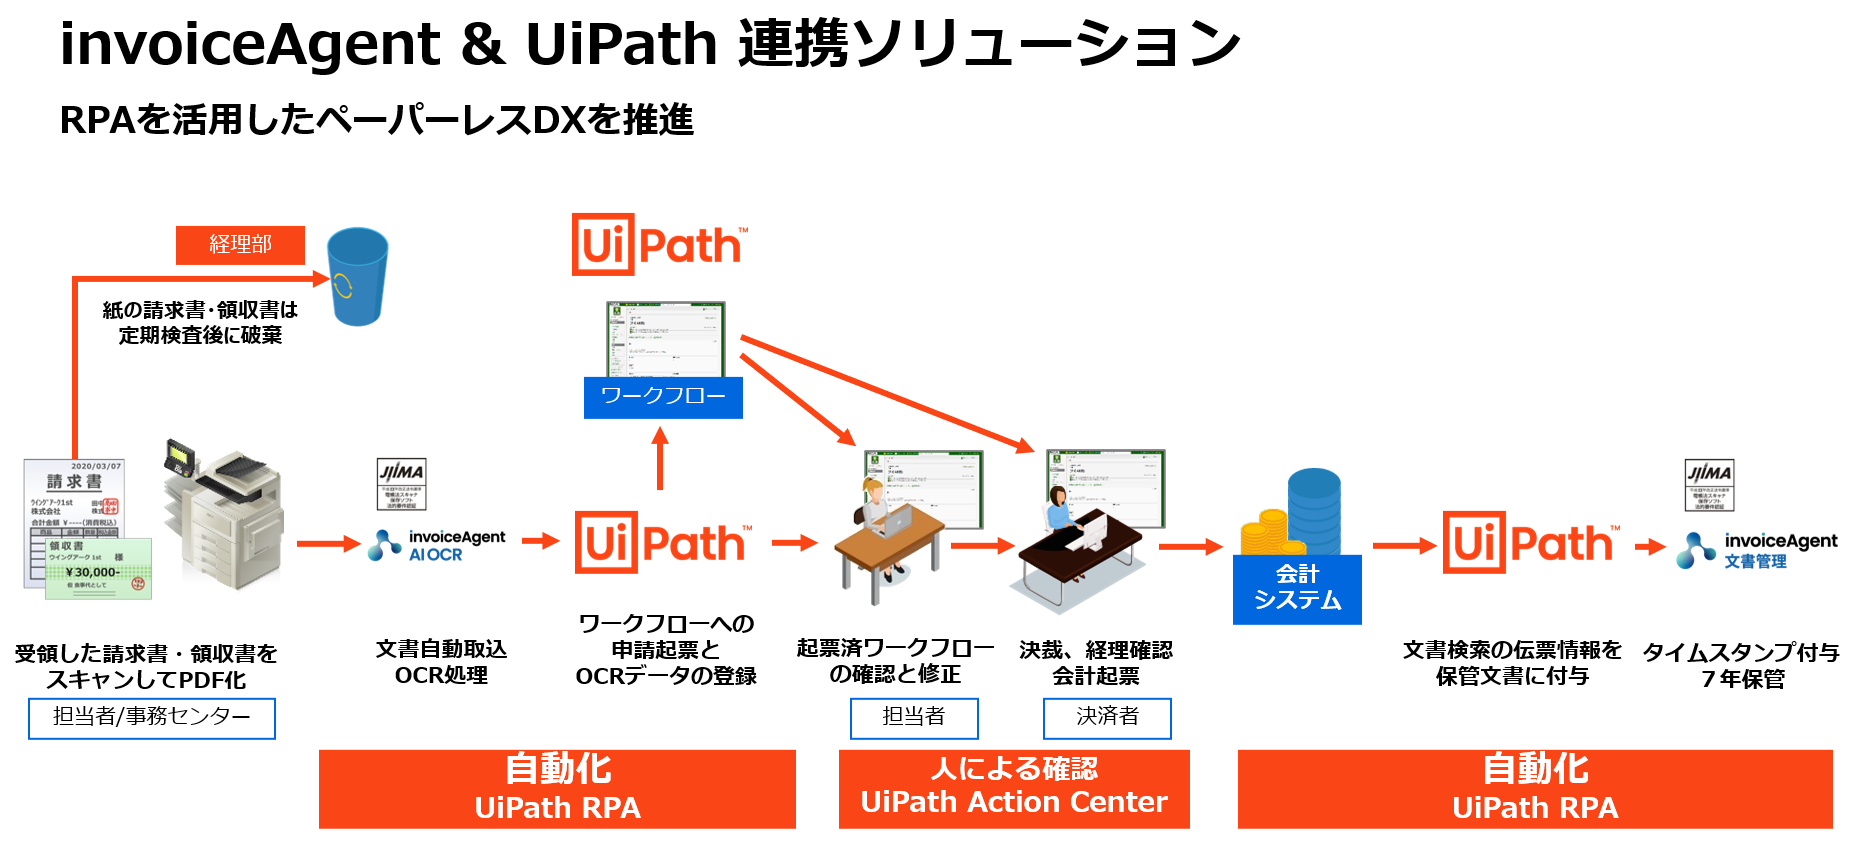 invoiceAgent&UiPath連携ソリューション_2022年版.png